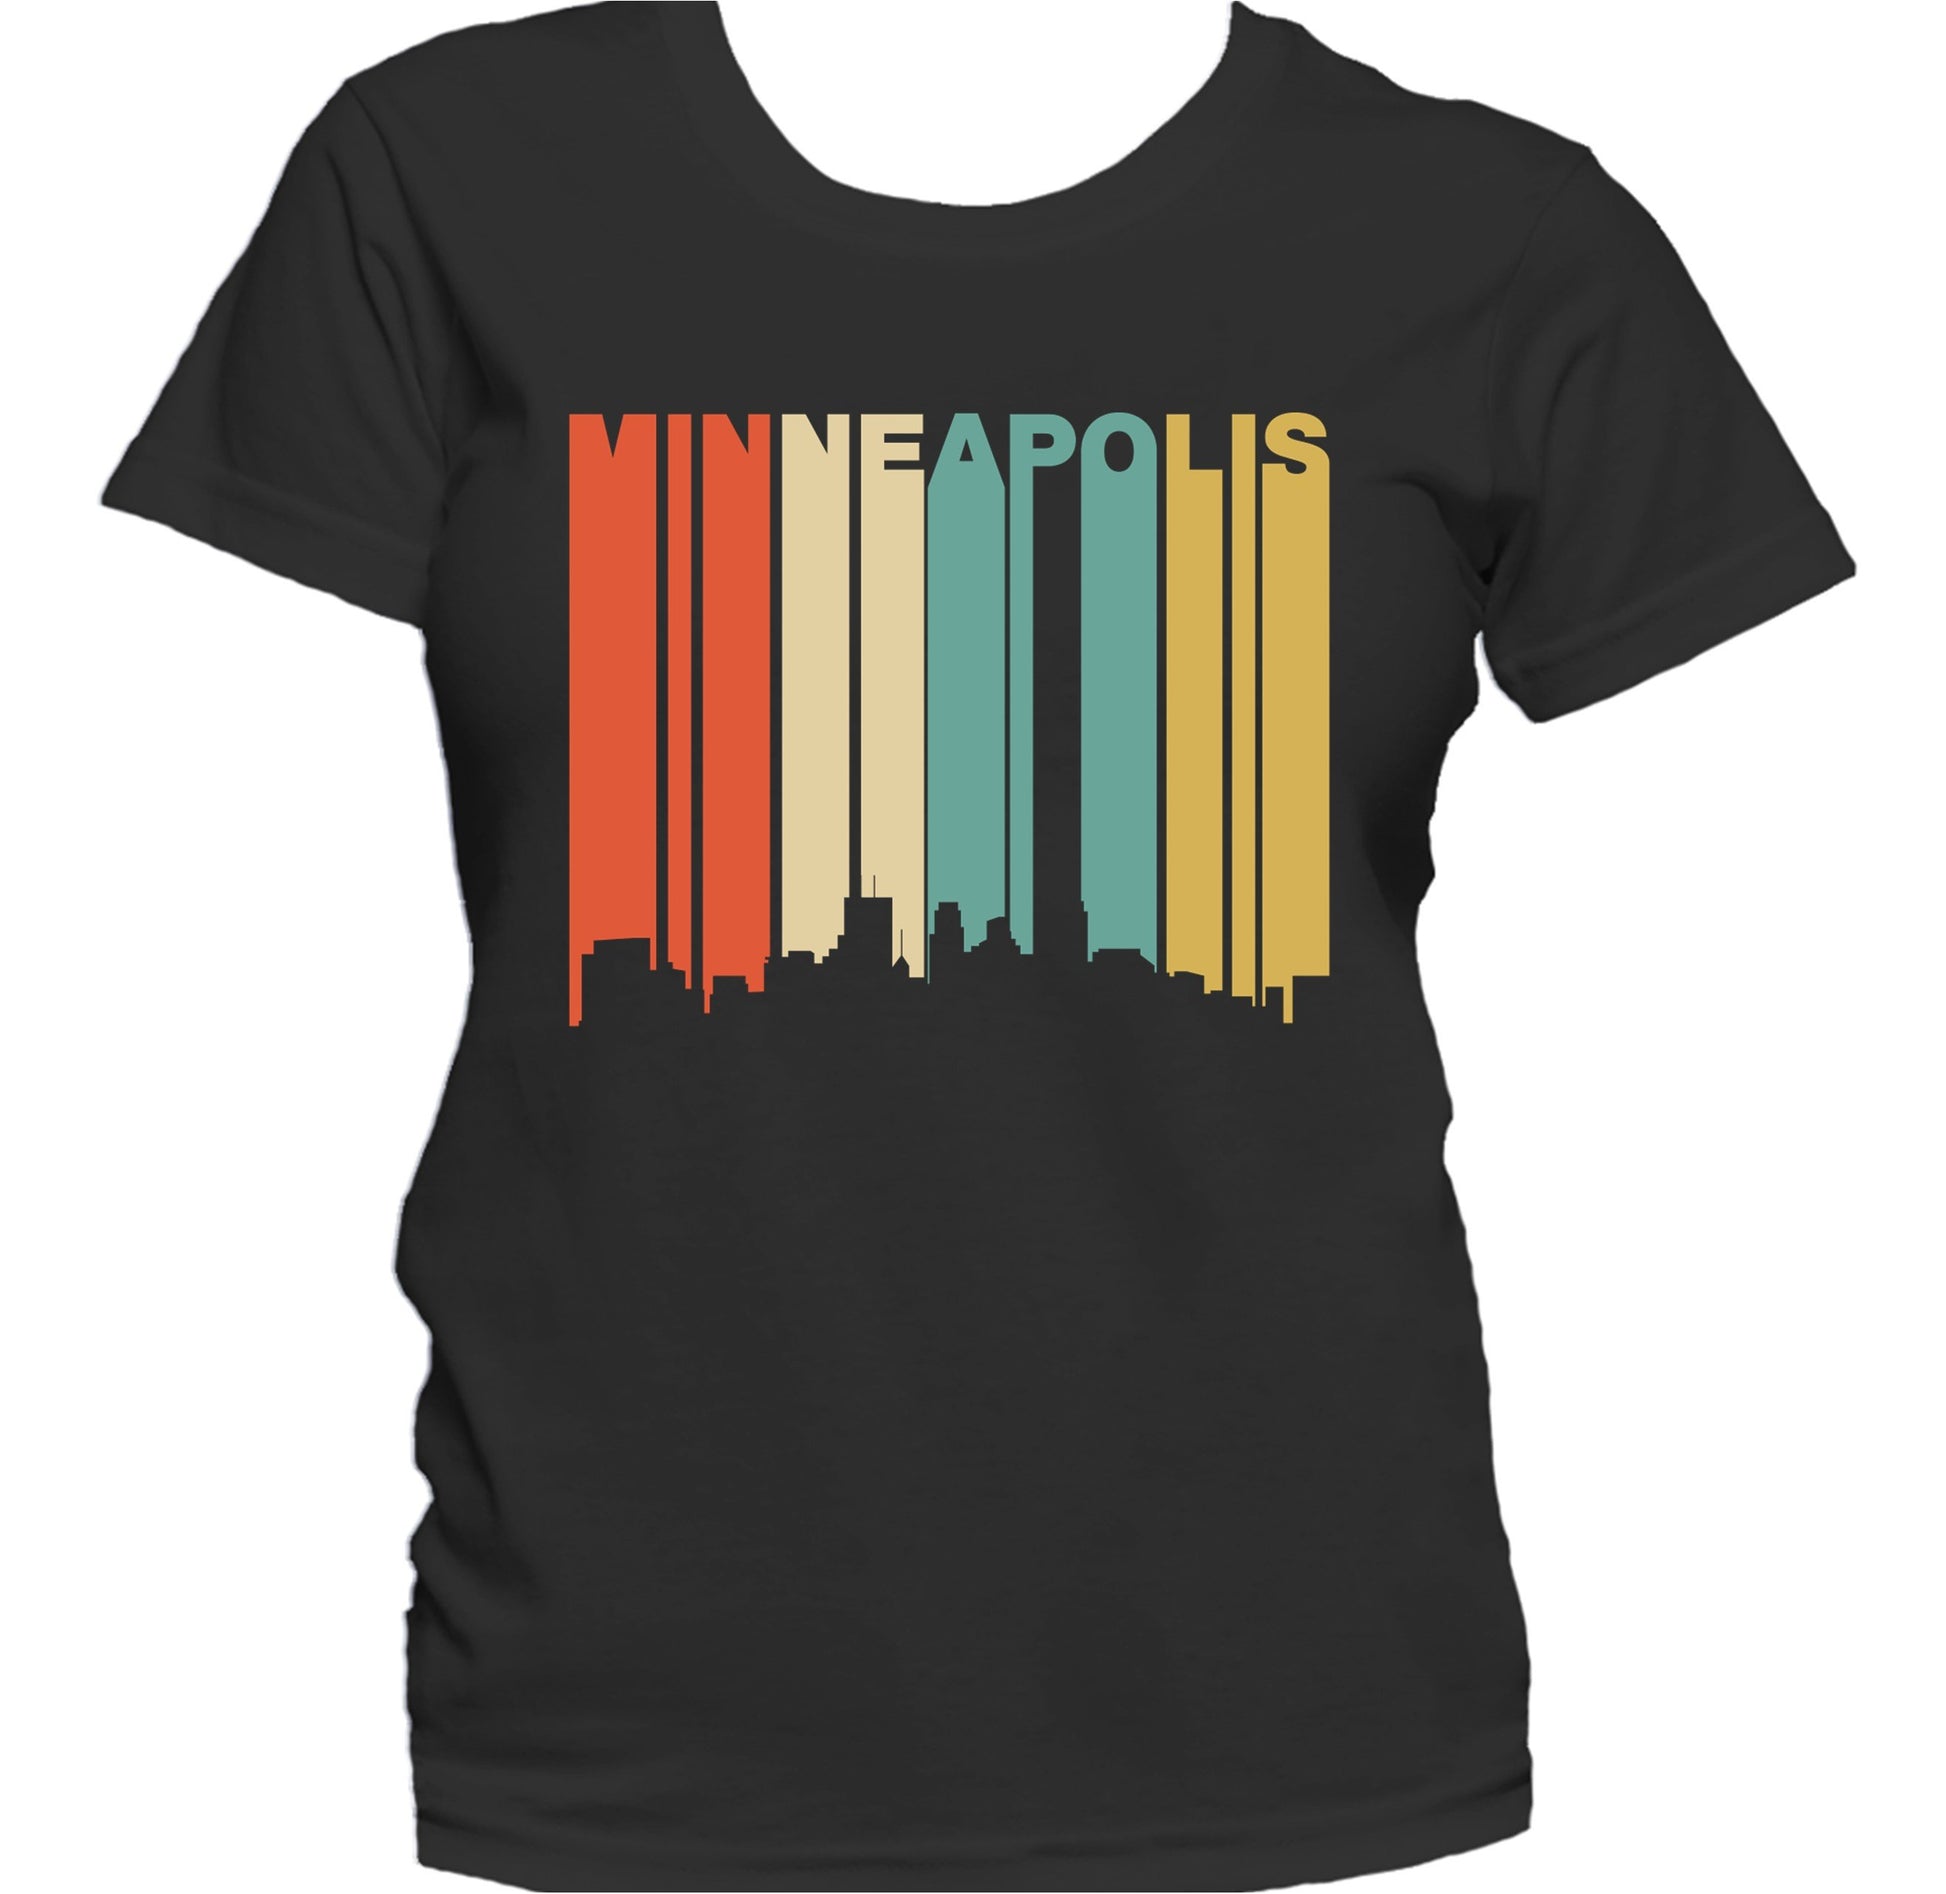 Retro 1970's Style Minneapolis Minnesota Skyline Women's T-Shirt